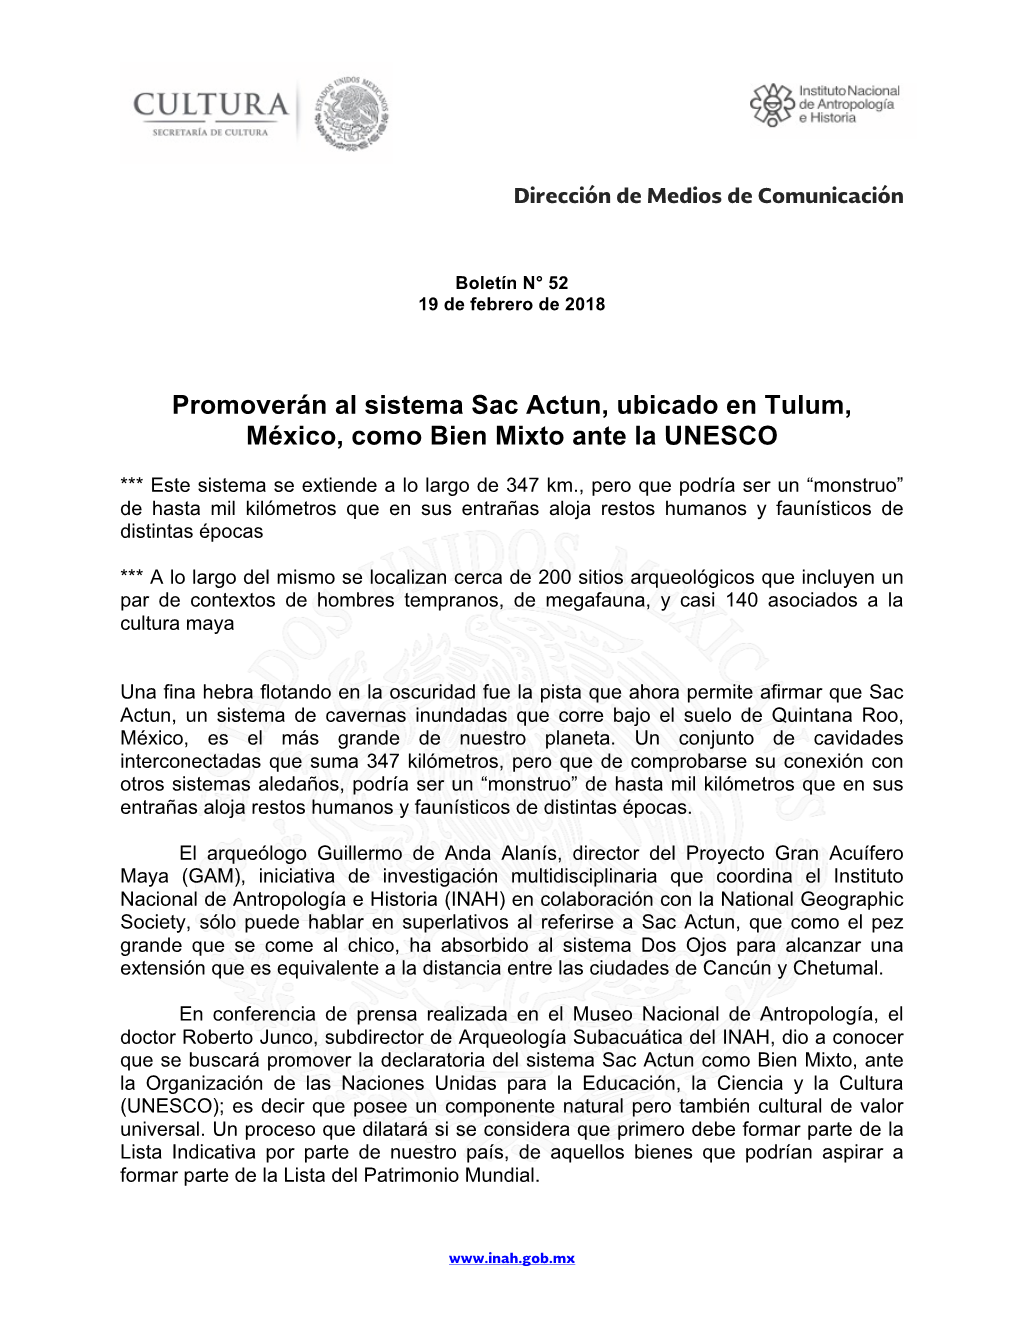 Promoverán Al Sistema Sac Actun, Ubicado En Tulum, México, Como Bien Mixto Ante La UNESCO